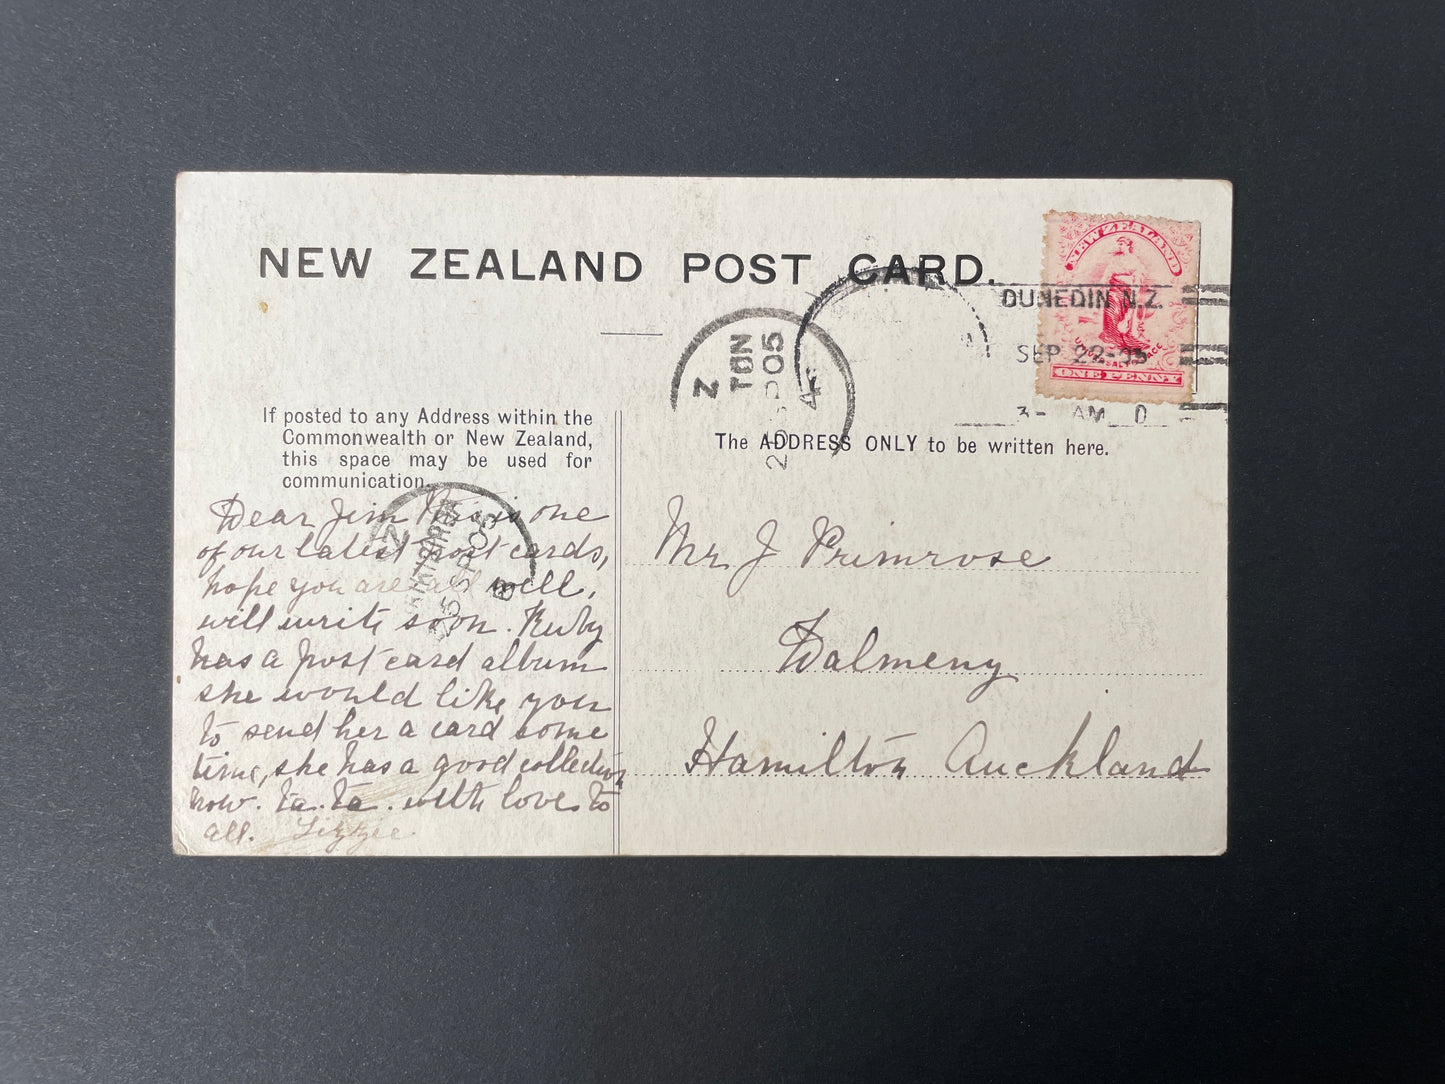 
                  
                    RARE! - NZ Postcard - Taiaroa's Tangi 13 August 1905 (15071)
                  
                